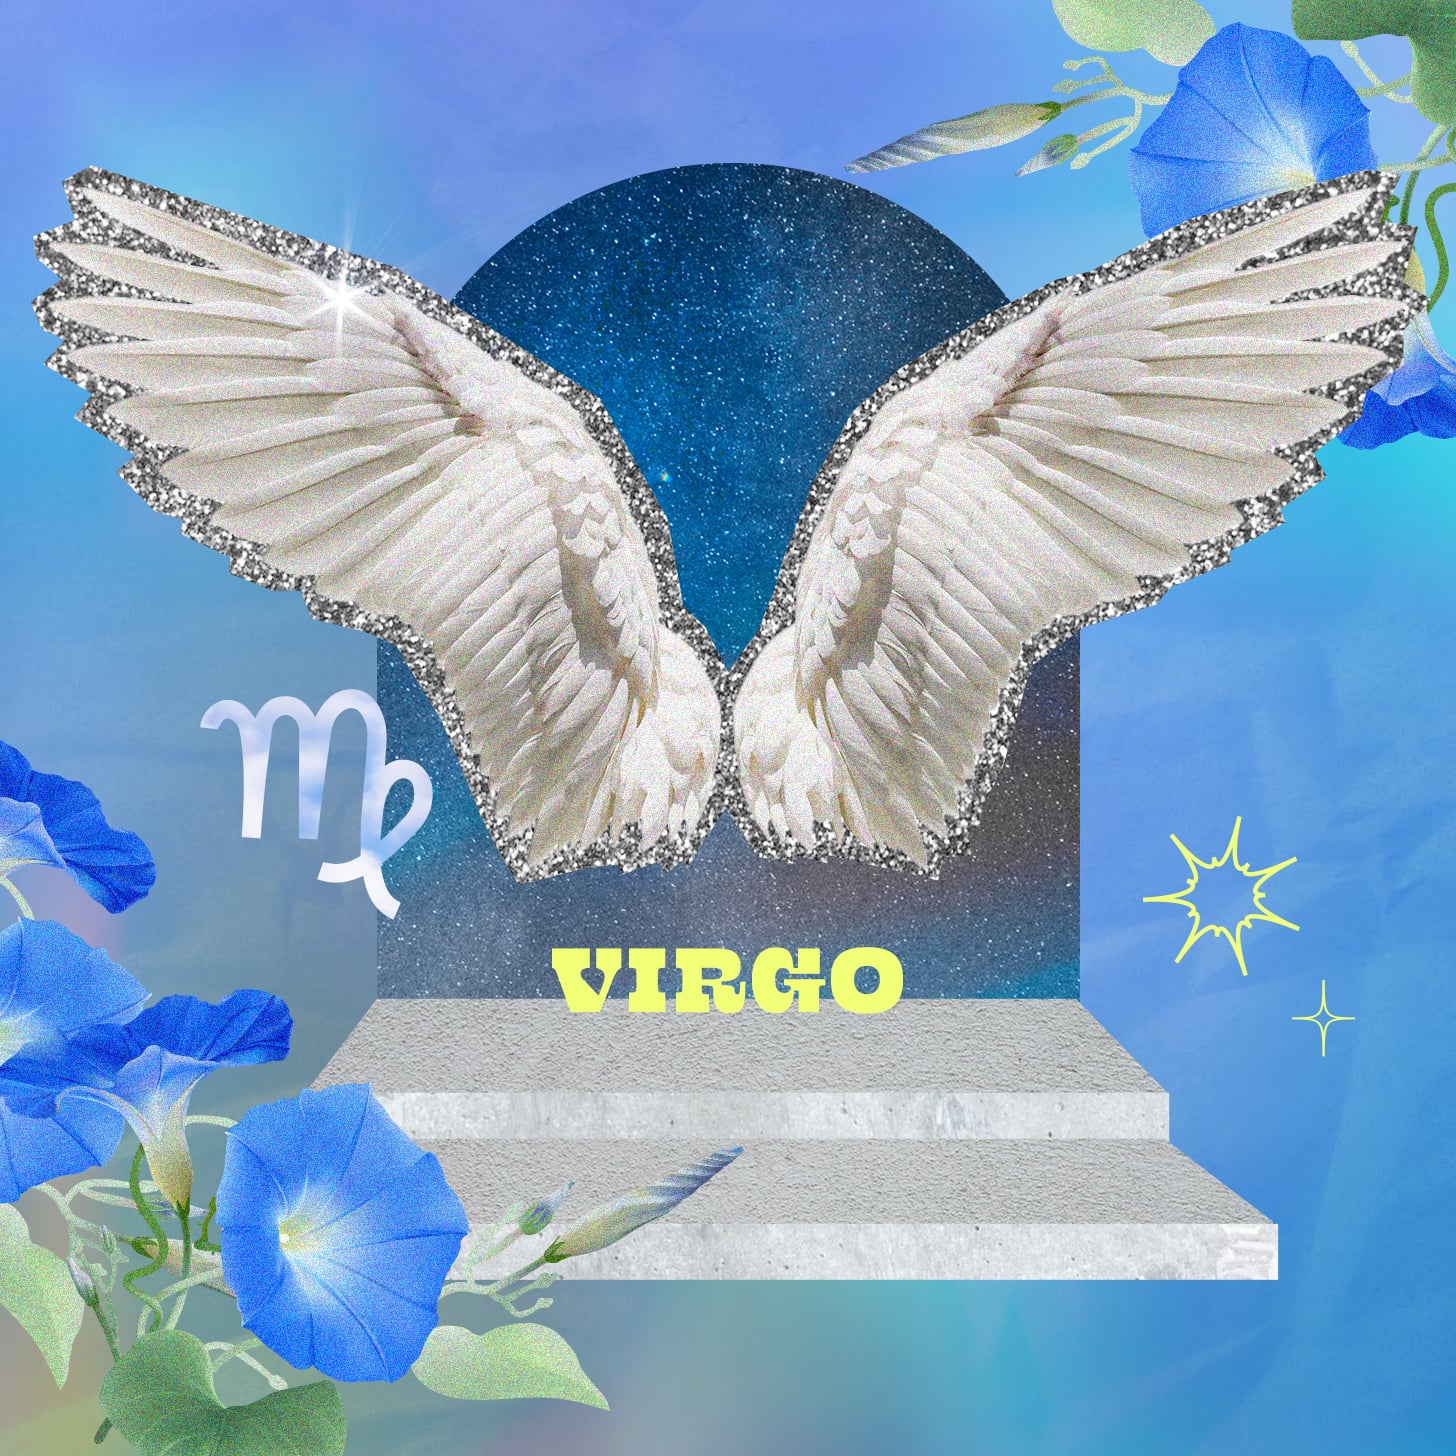 Virgo weekly horoscope for April 24, 2022